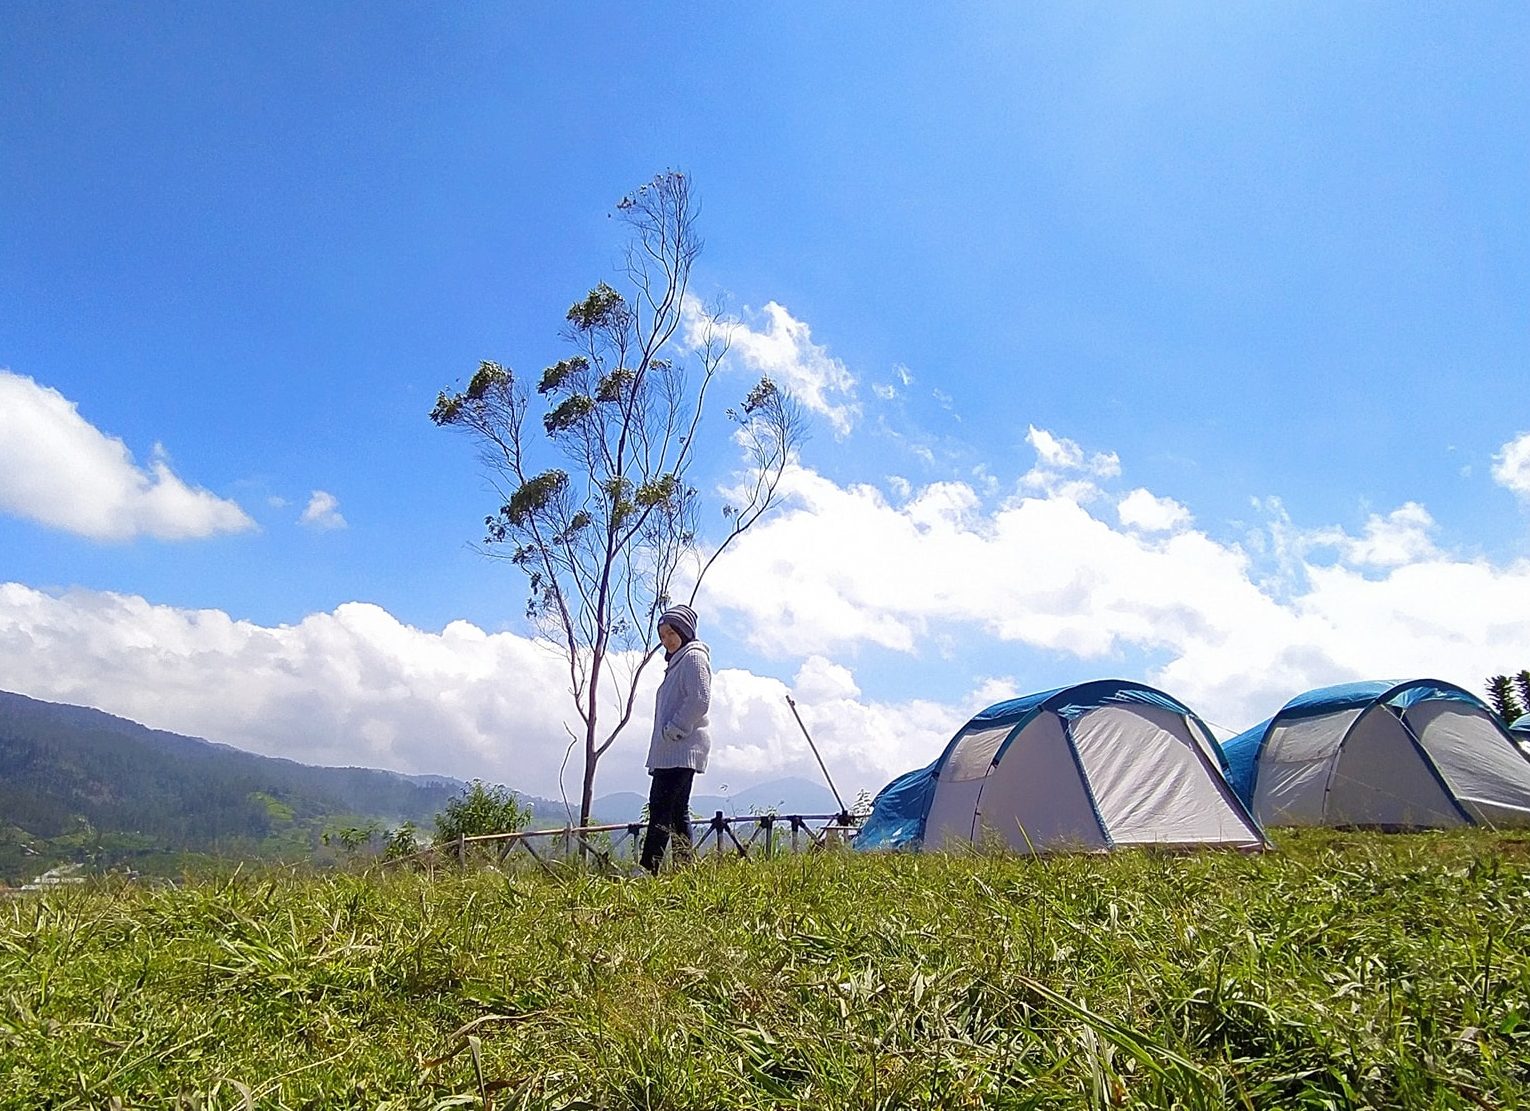 tempat camping di Bandung murah untuk merayakan tahun baru, dengan suasana alam pegunungan bisa dijadikan altenatif untuk merayakannya